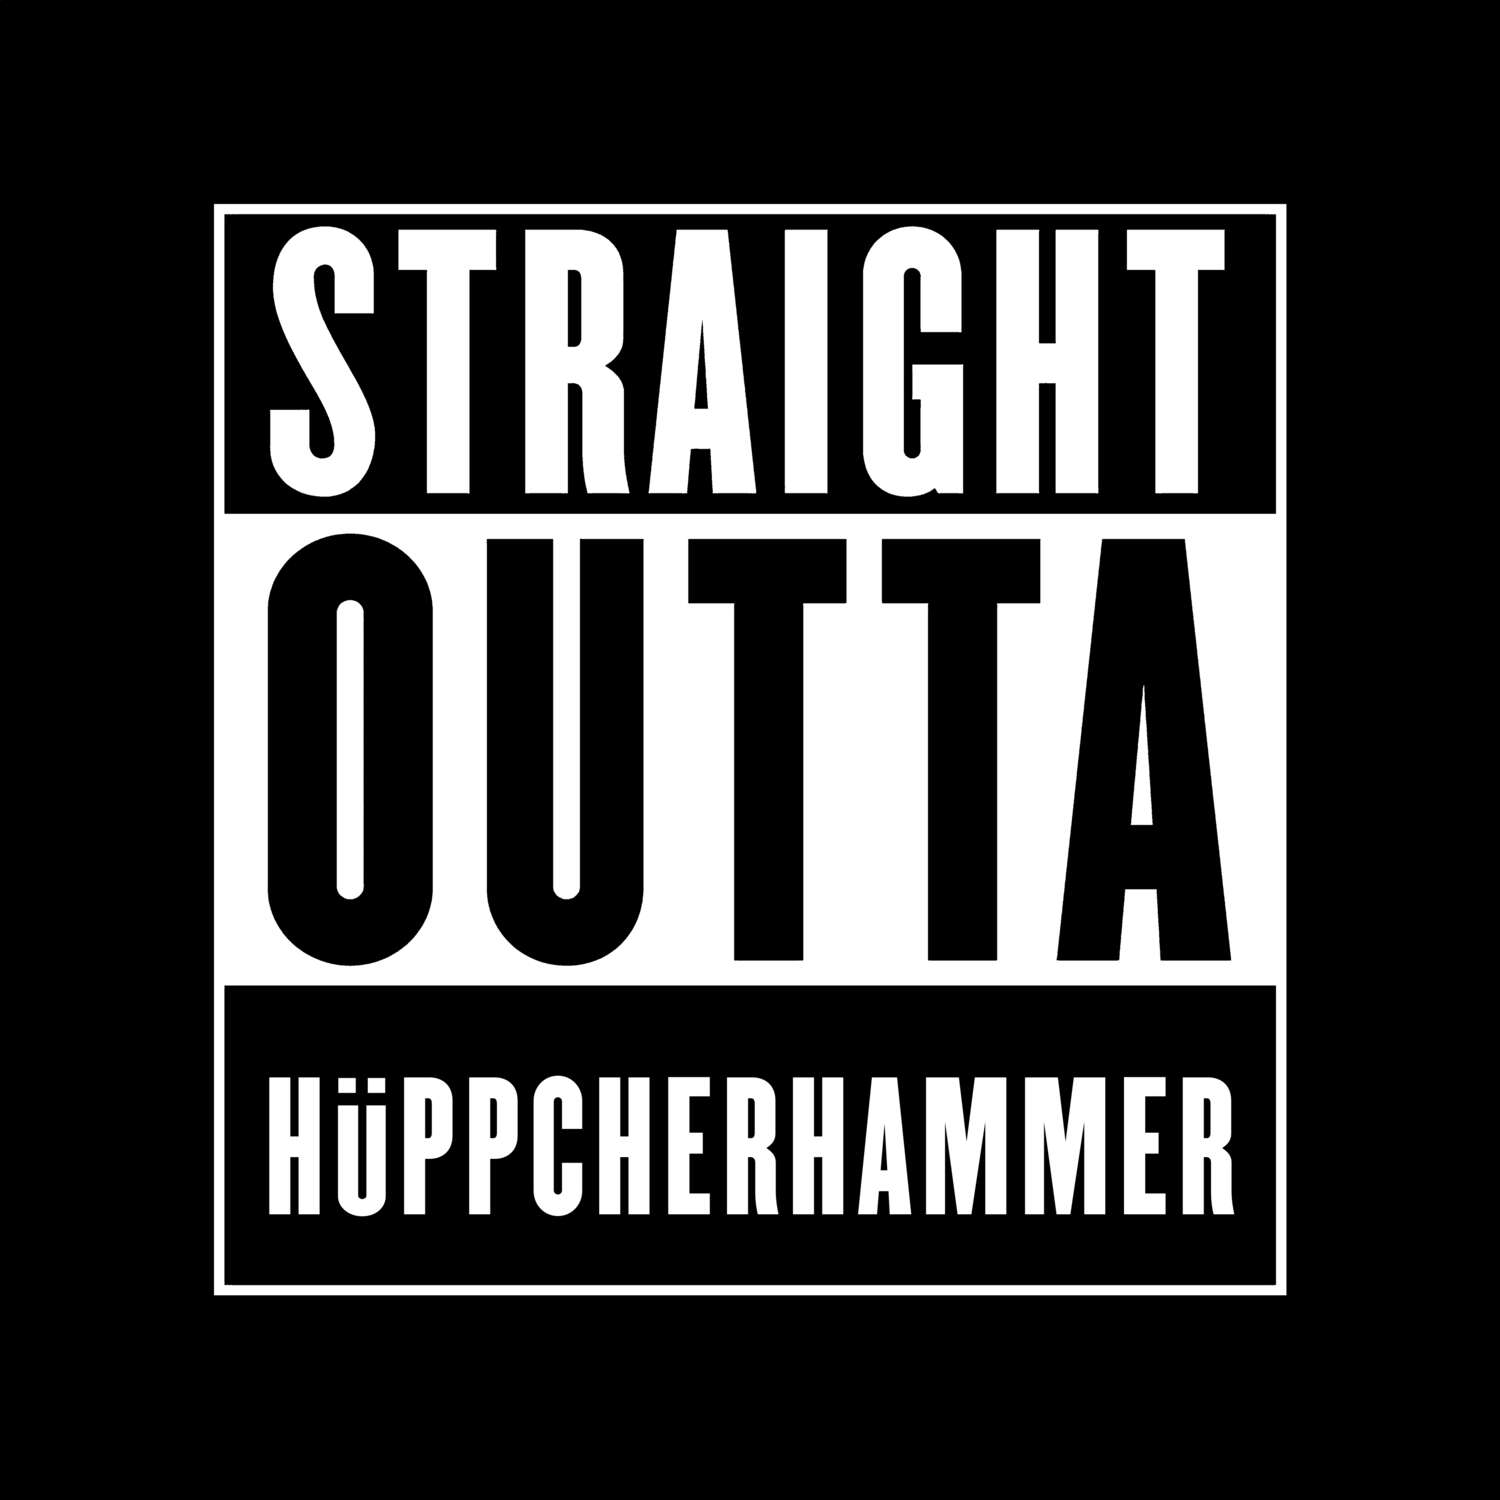 Hüppcherhammer T-Shirt »Straight Outta«